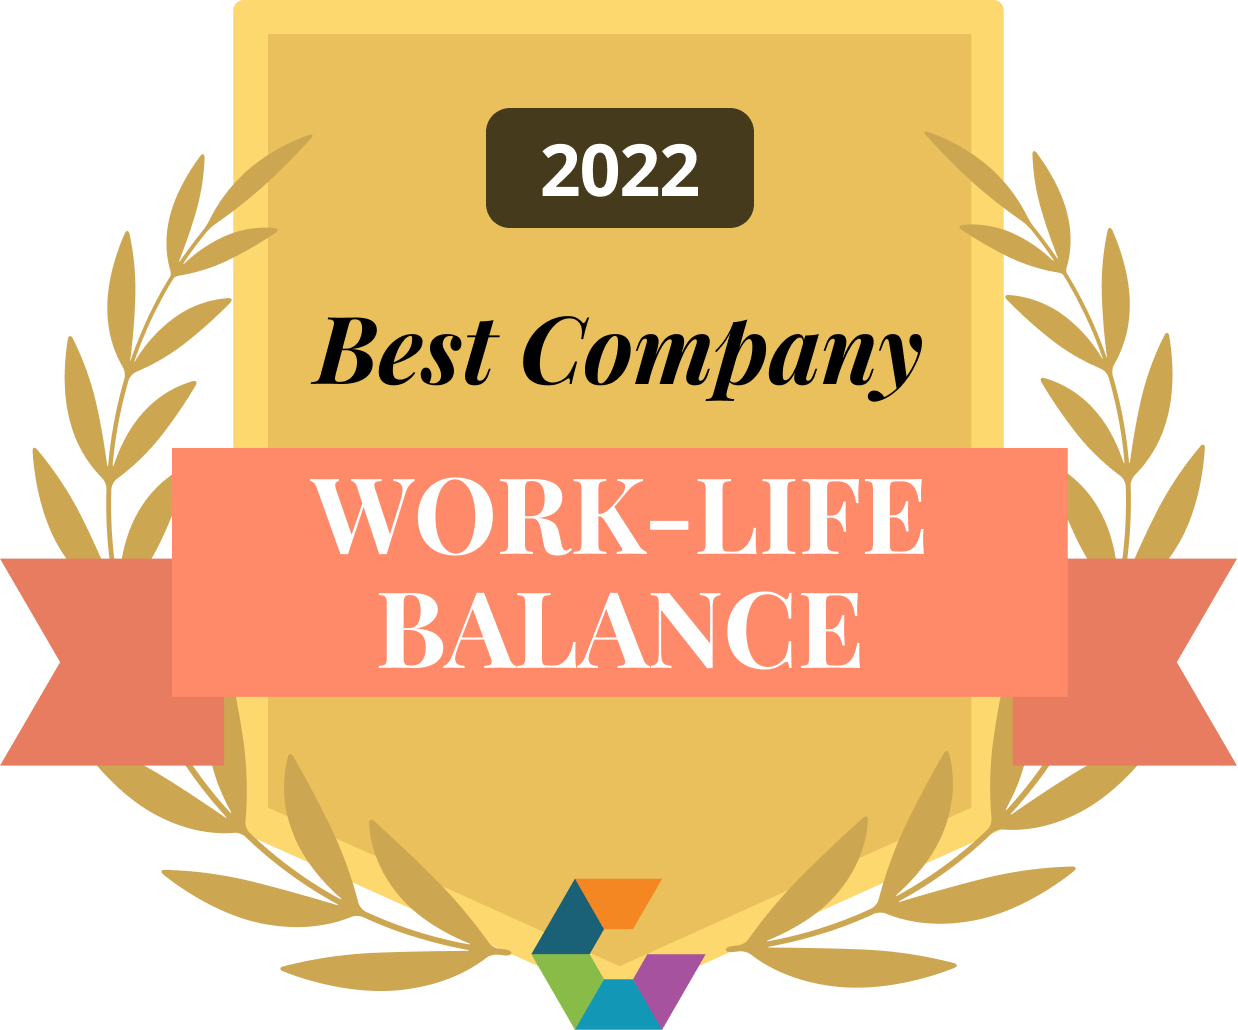 2022 Best Company: Work-Life Balance